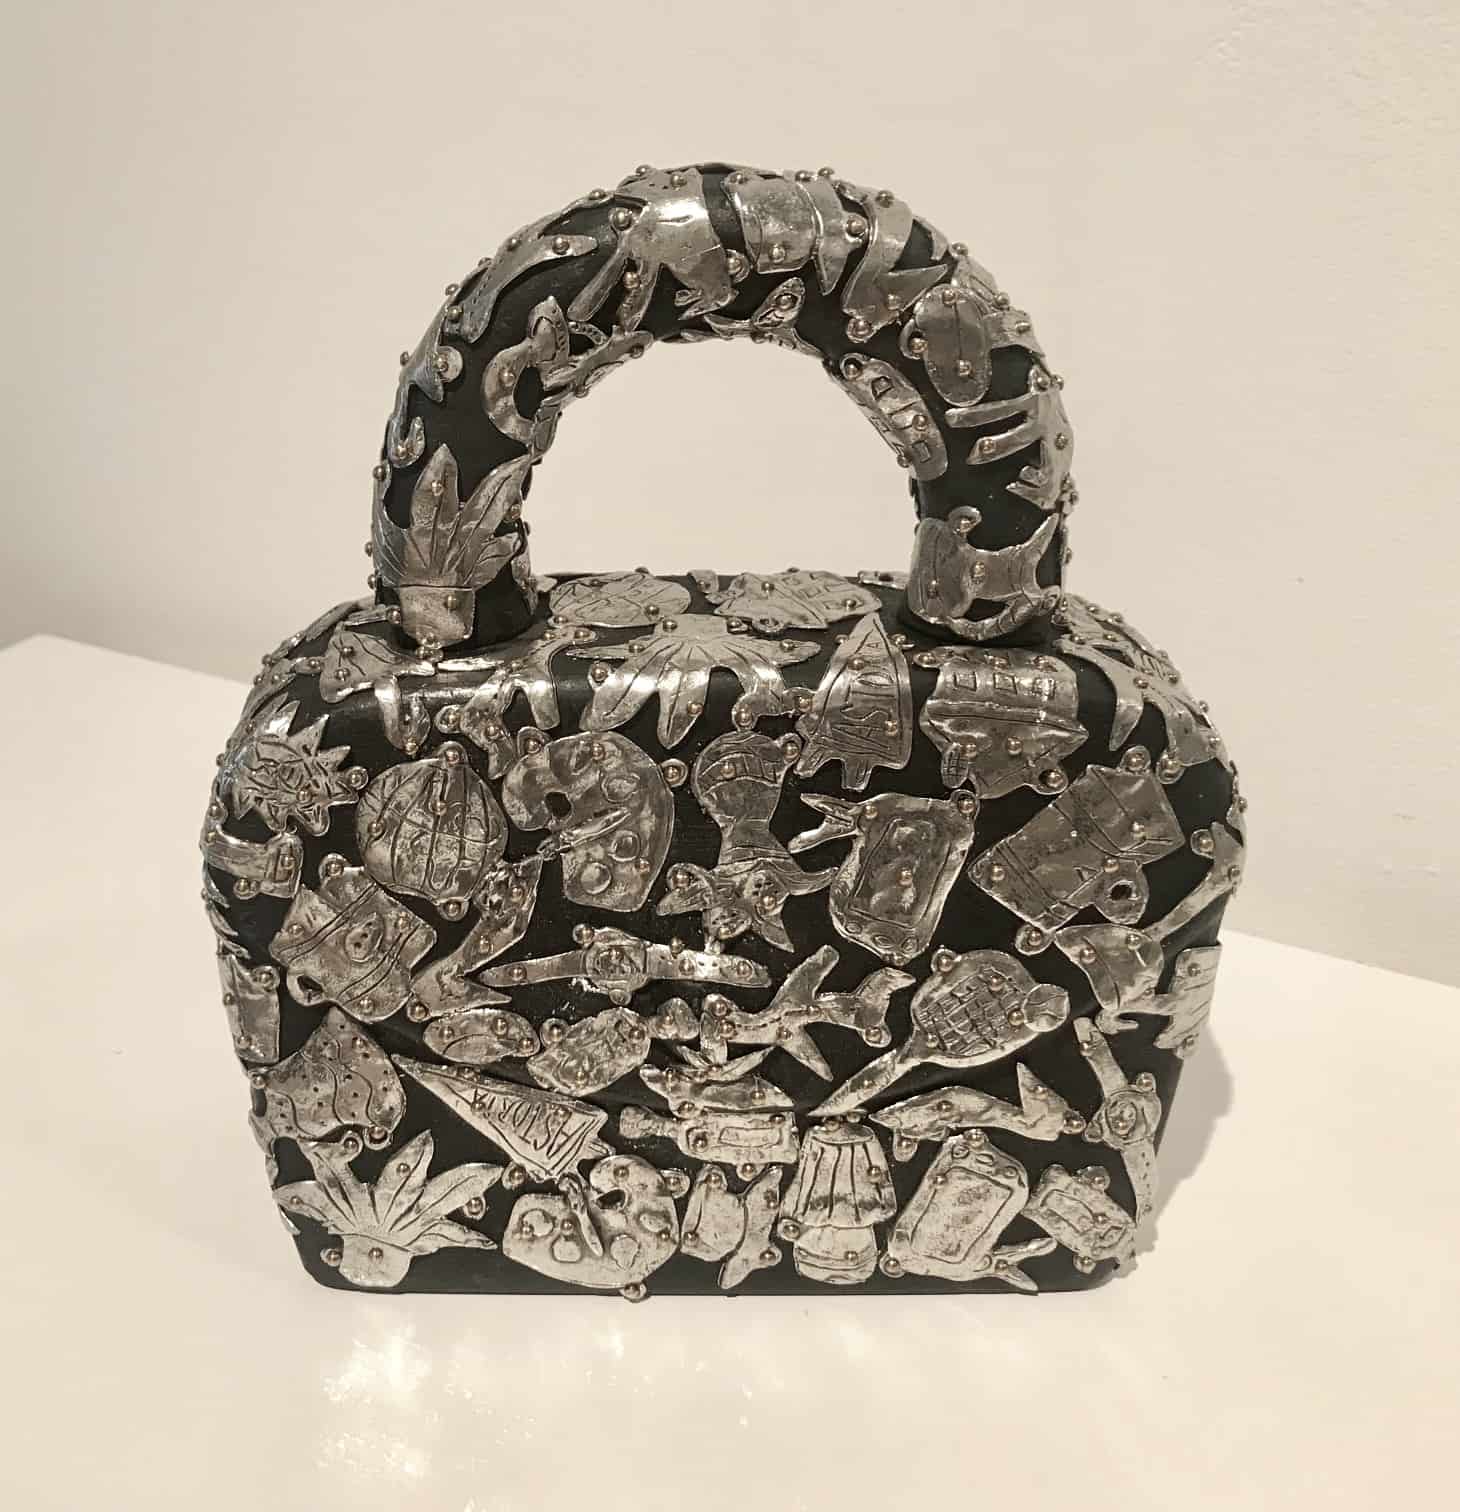 Demonte 2018, Female Fetish Small Handbag, pewter on wood, 9.25 x 8 x 3.75 in